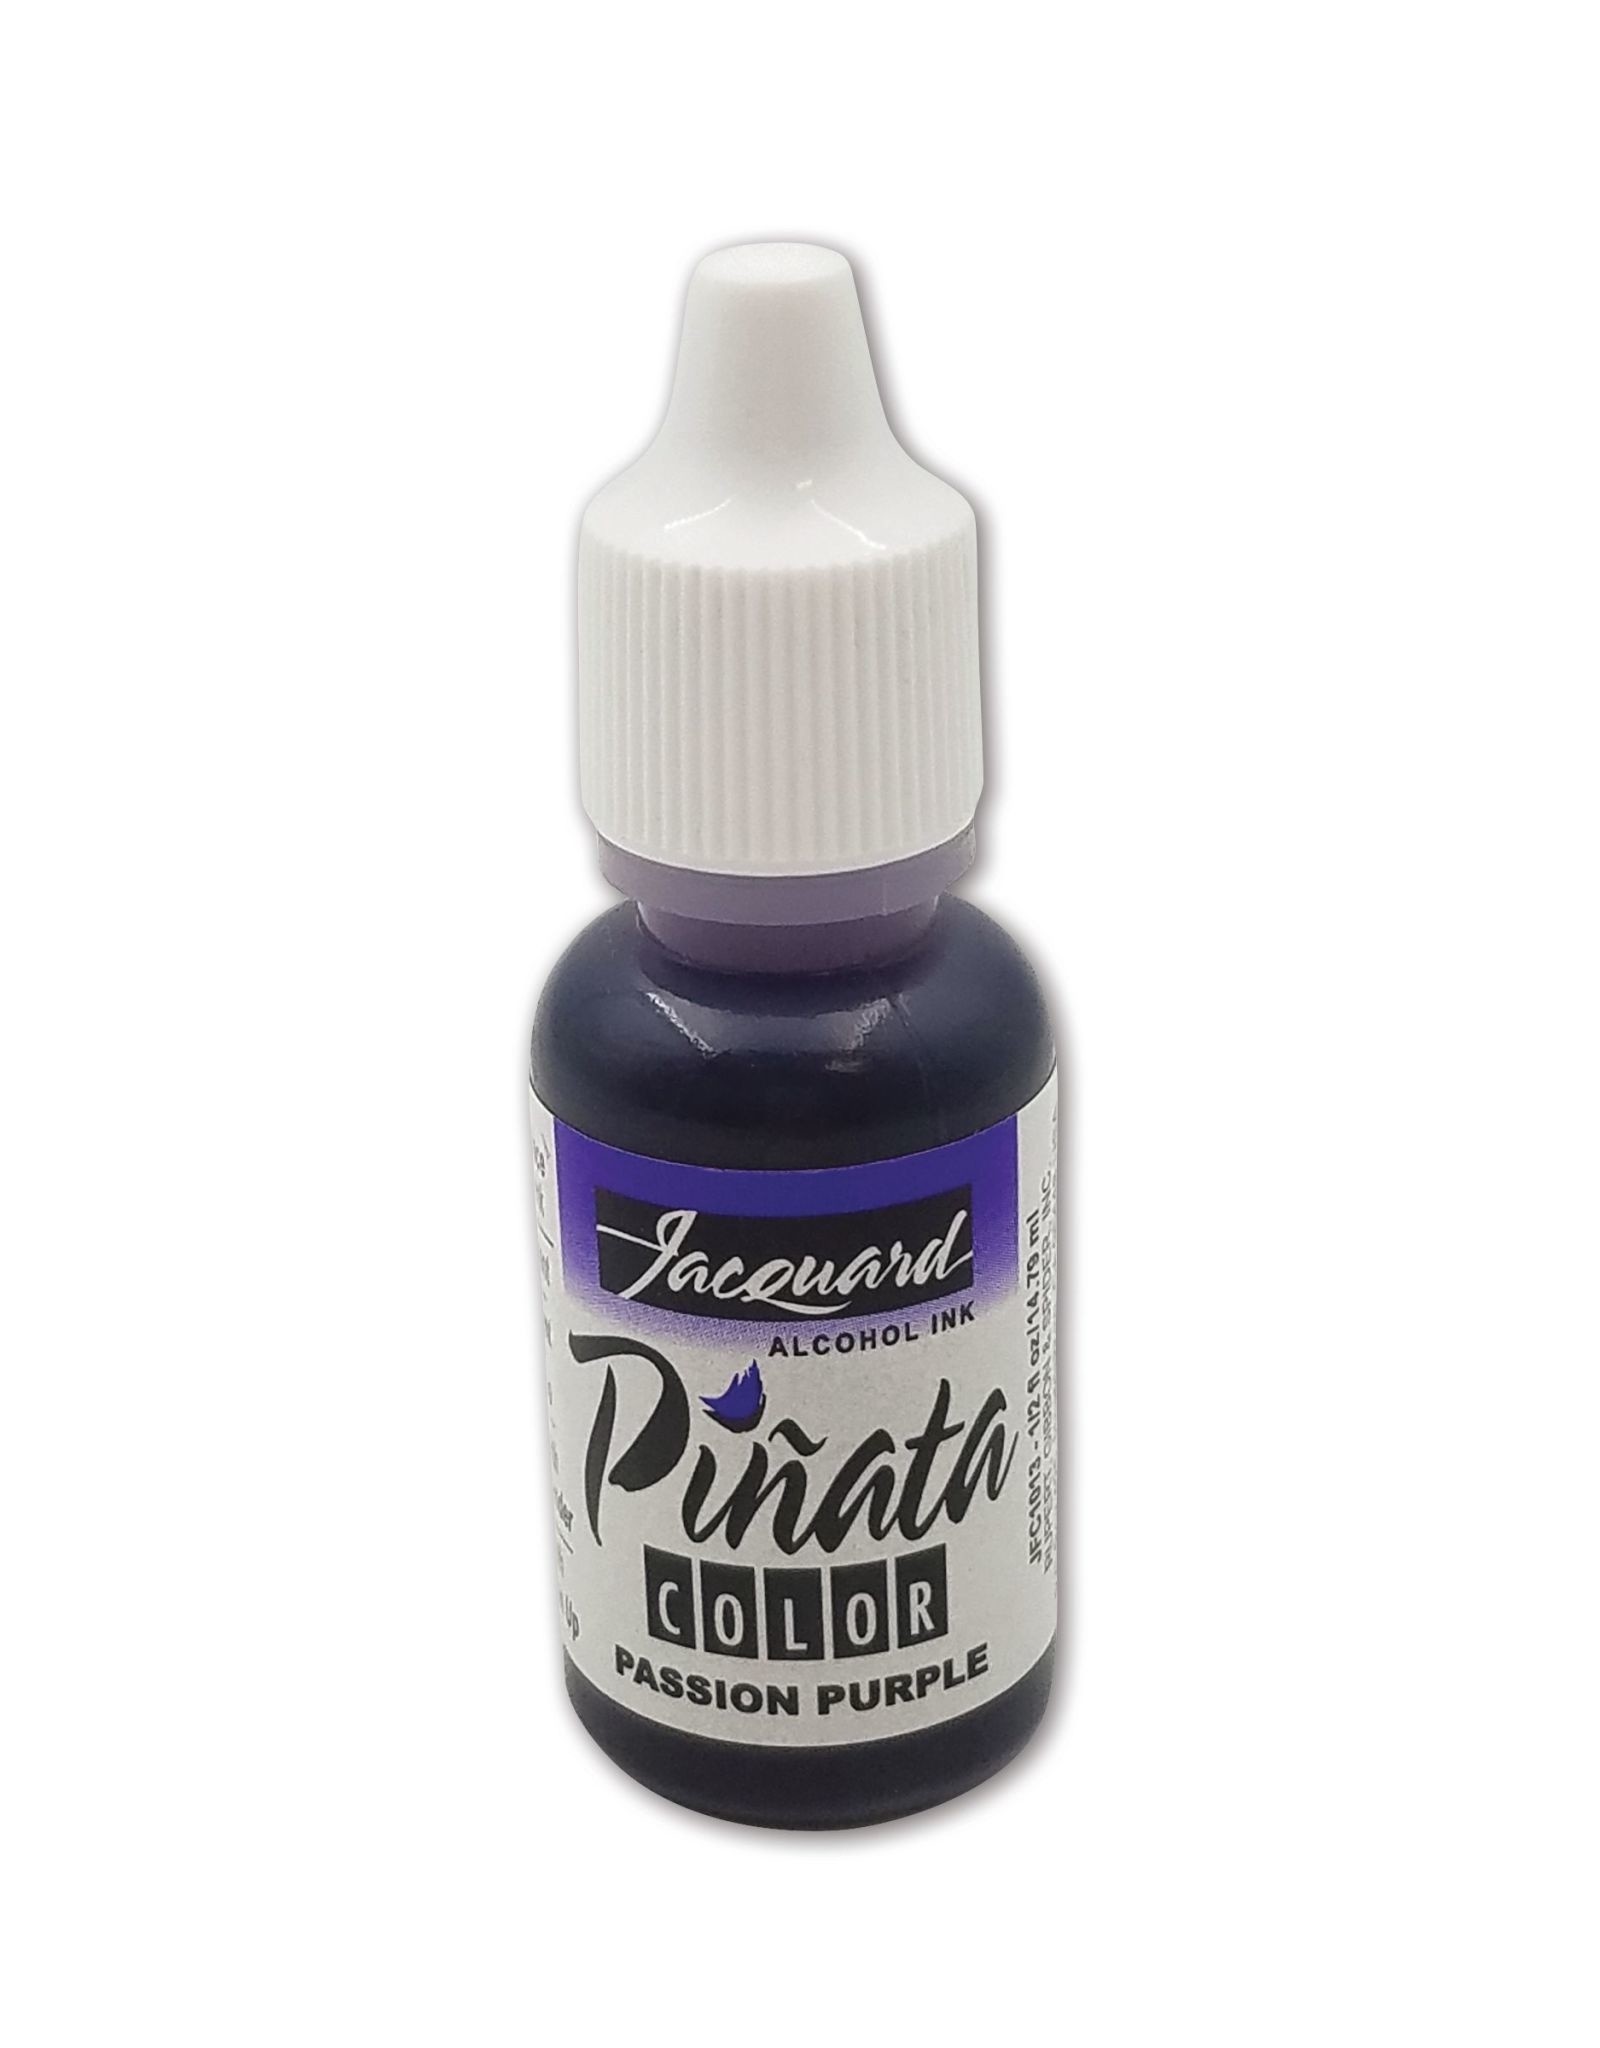 Jacquard Jacquard Pinata Alcohol Ink #013 Passion Purple .5oz